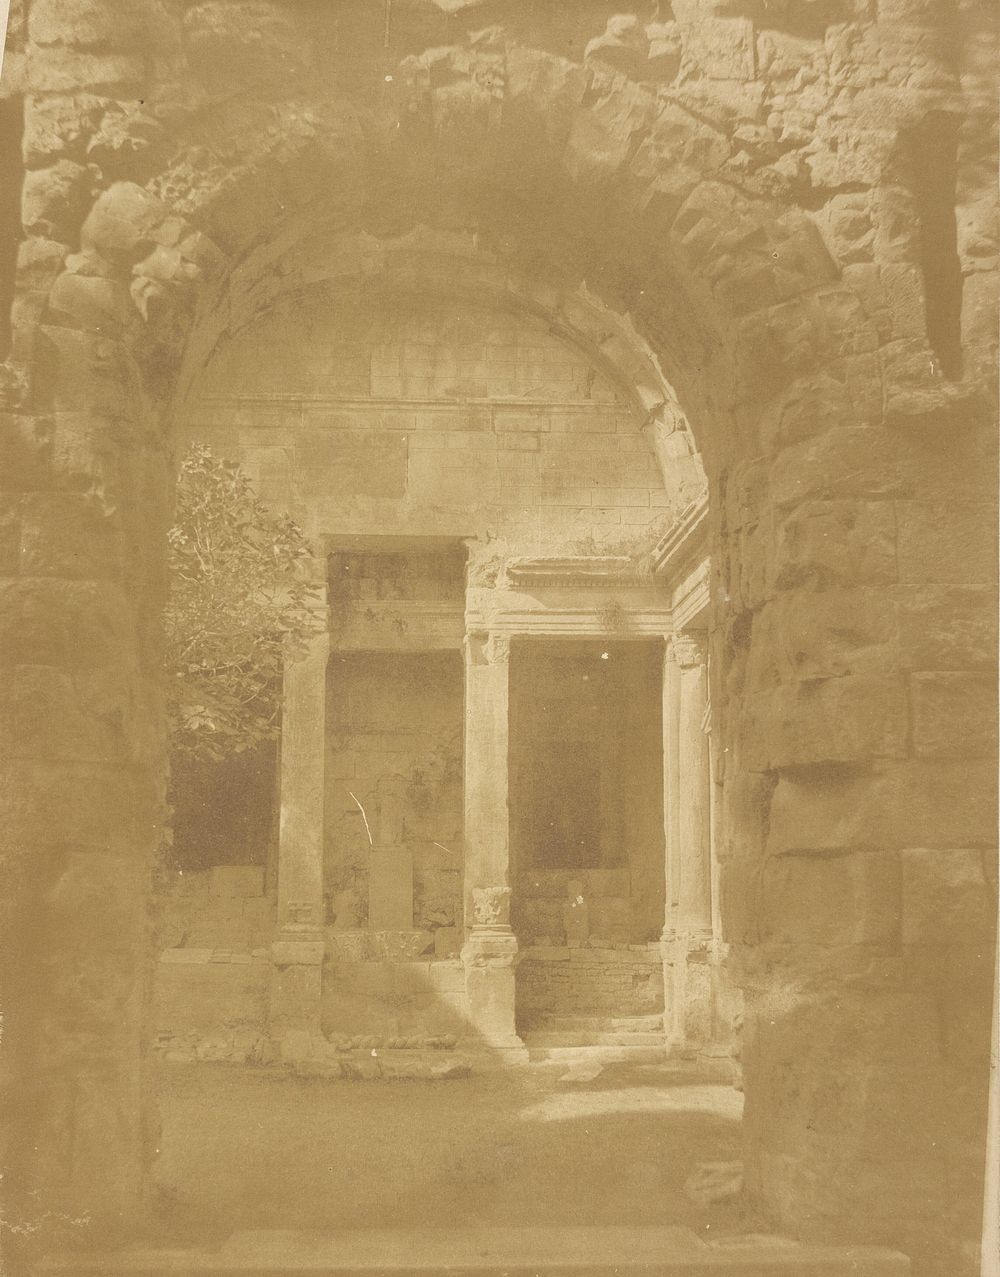 View of an antique inner courtyard in Nîmes by Pierre Émile Joseph Pécarrère